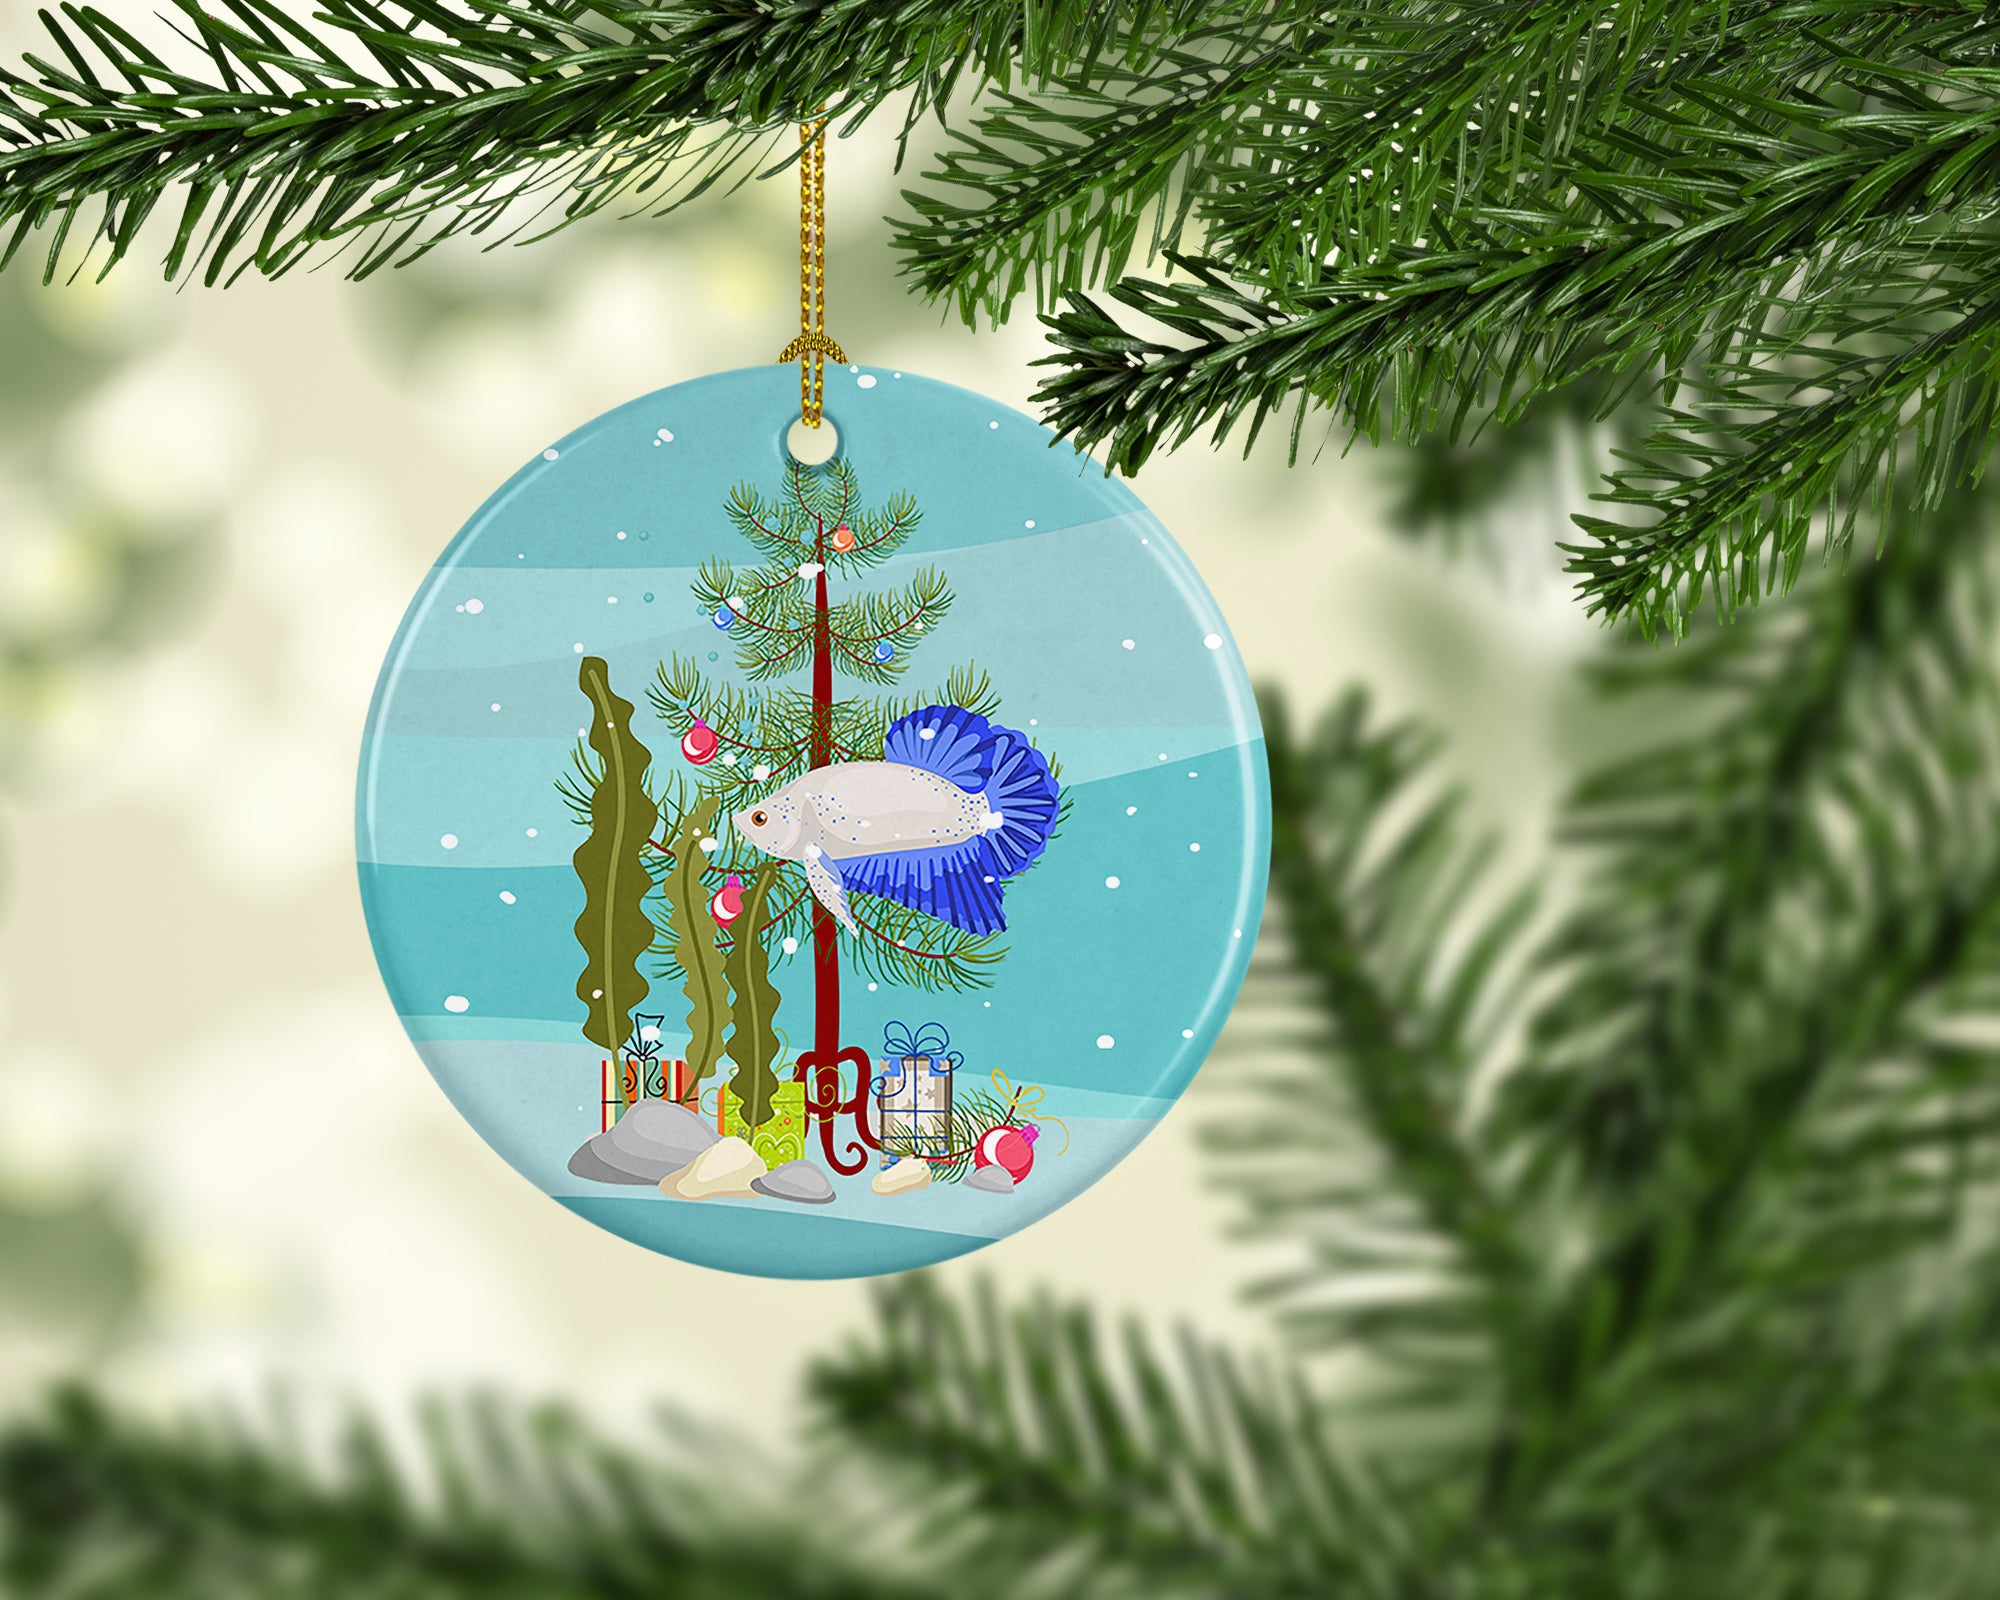 Buy this Plakat Betta Merry Christmas Ceramic Ornament